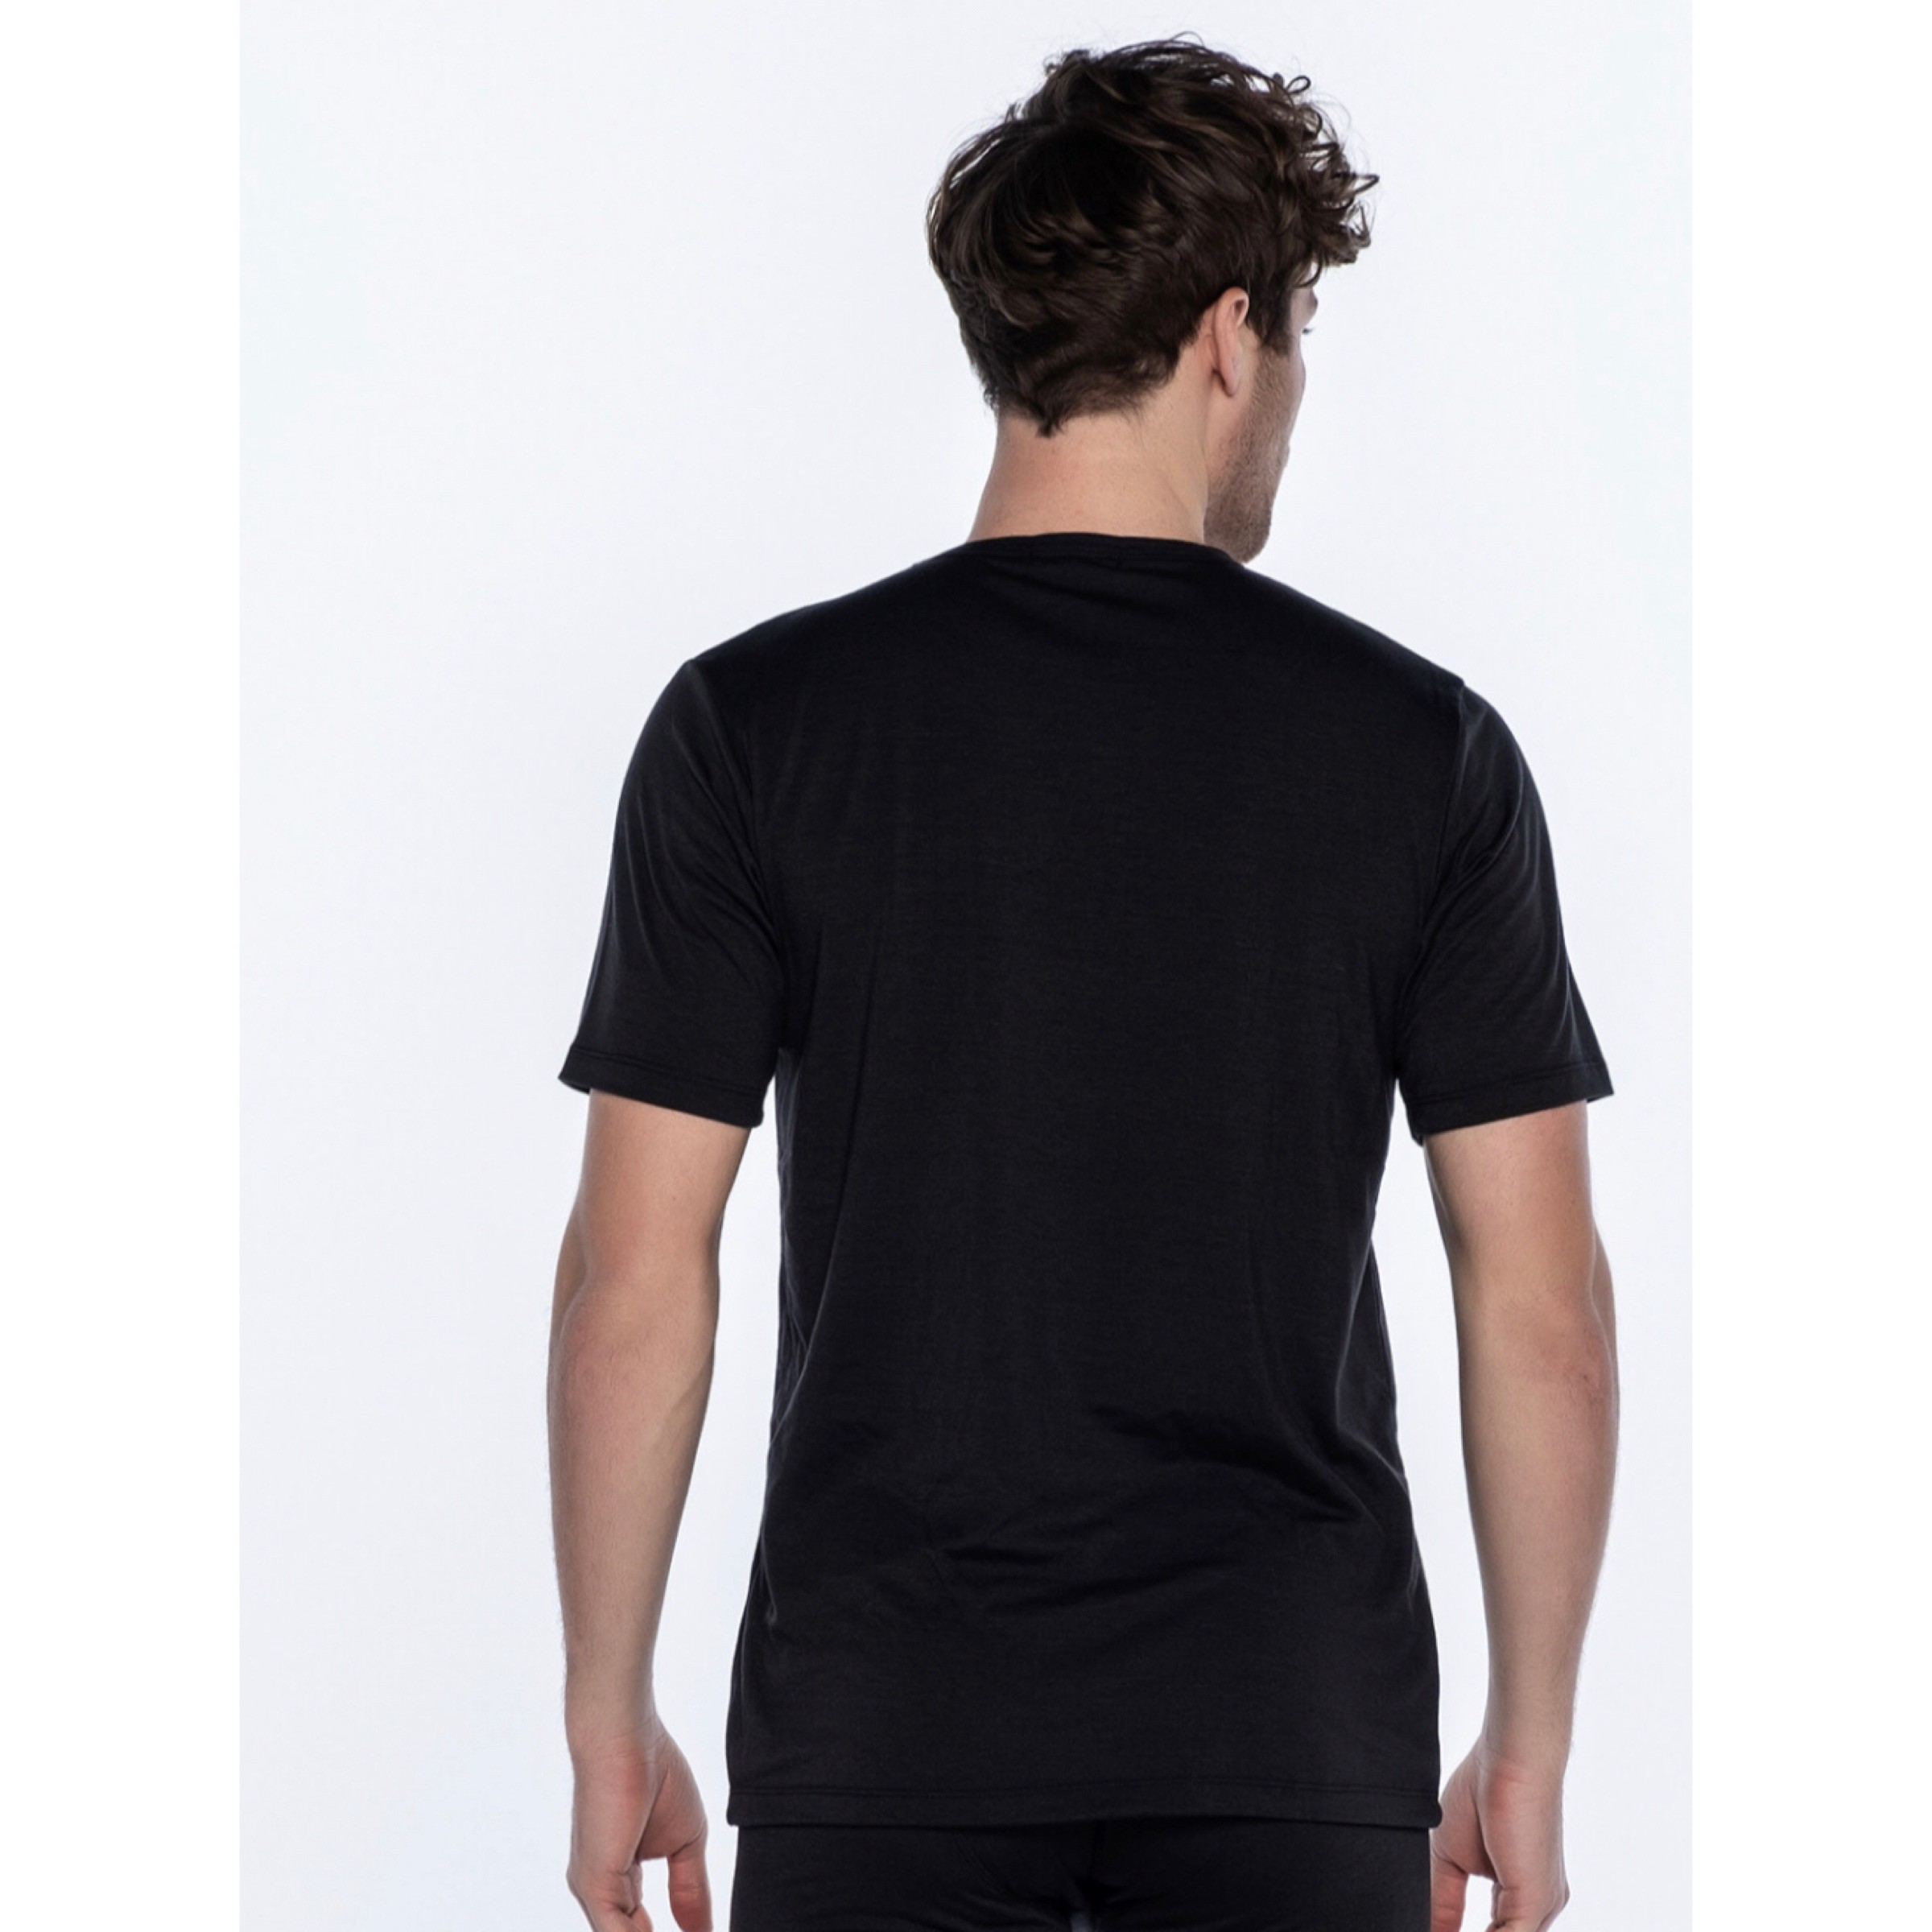 Camiseta negra térmica - Trade Moda Barcelona